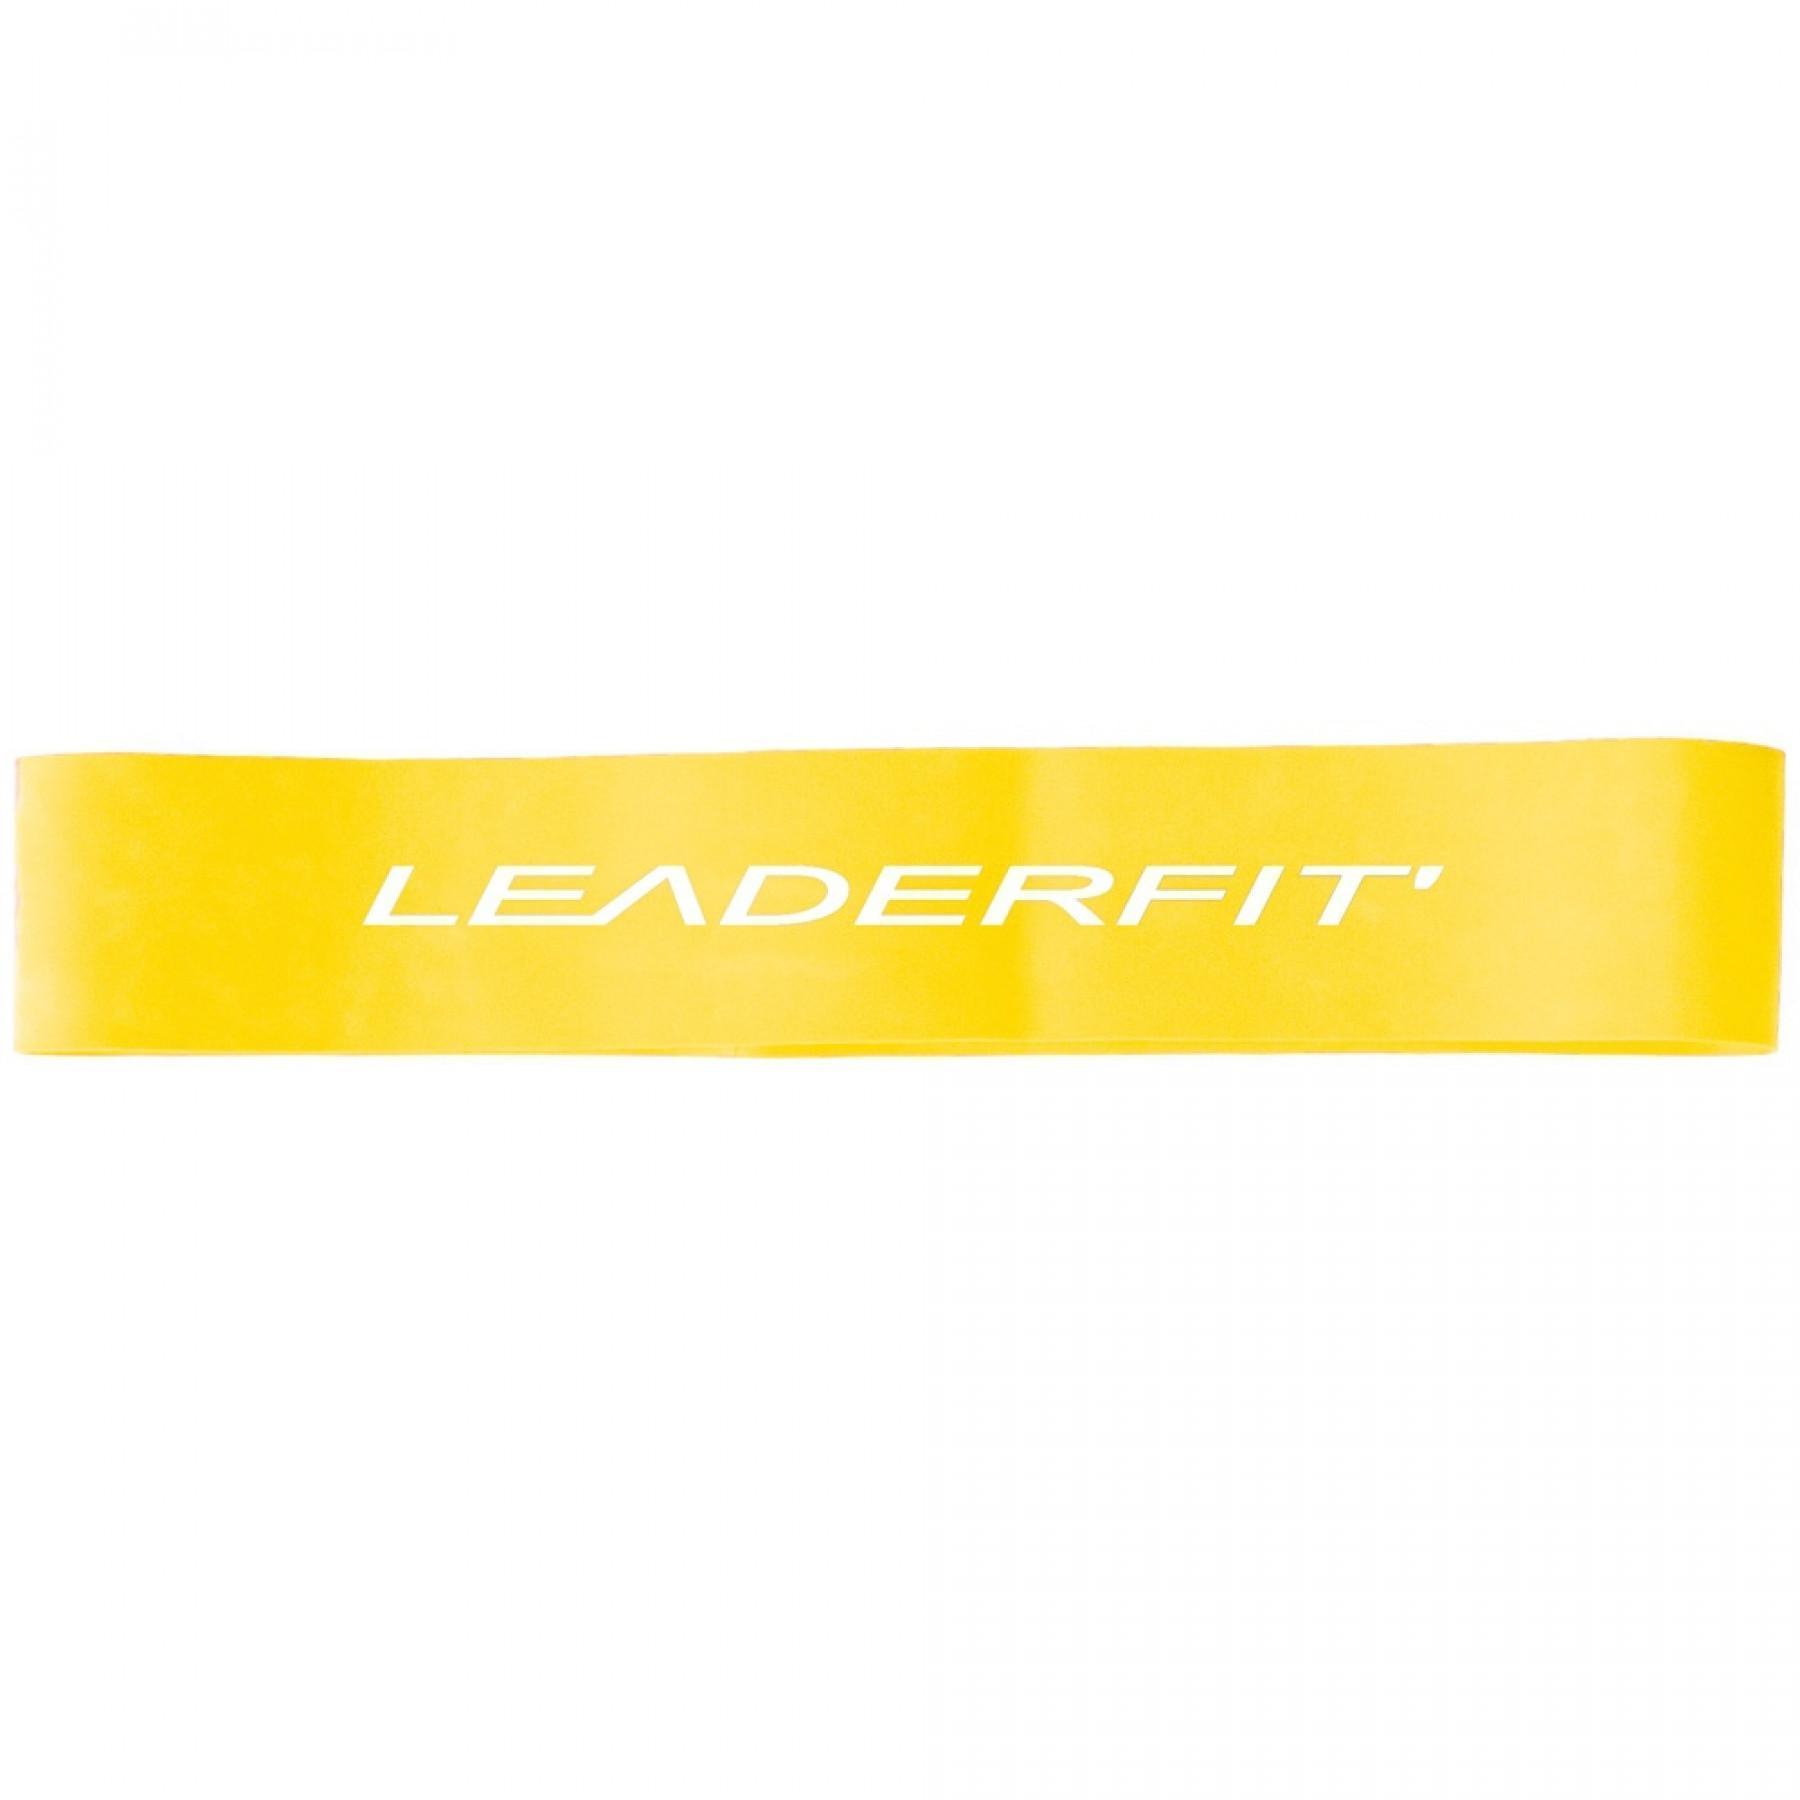 Miniband Leader Fit light